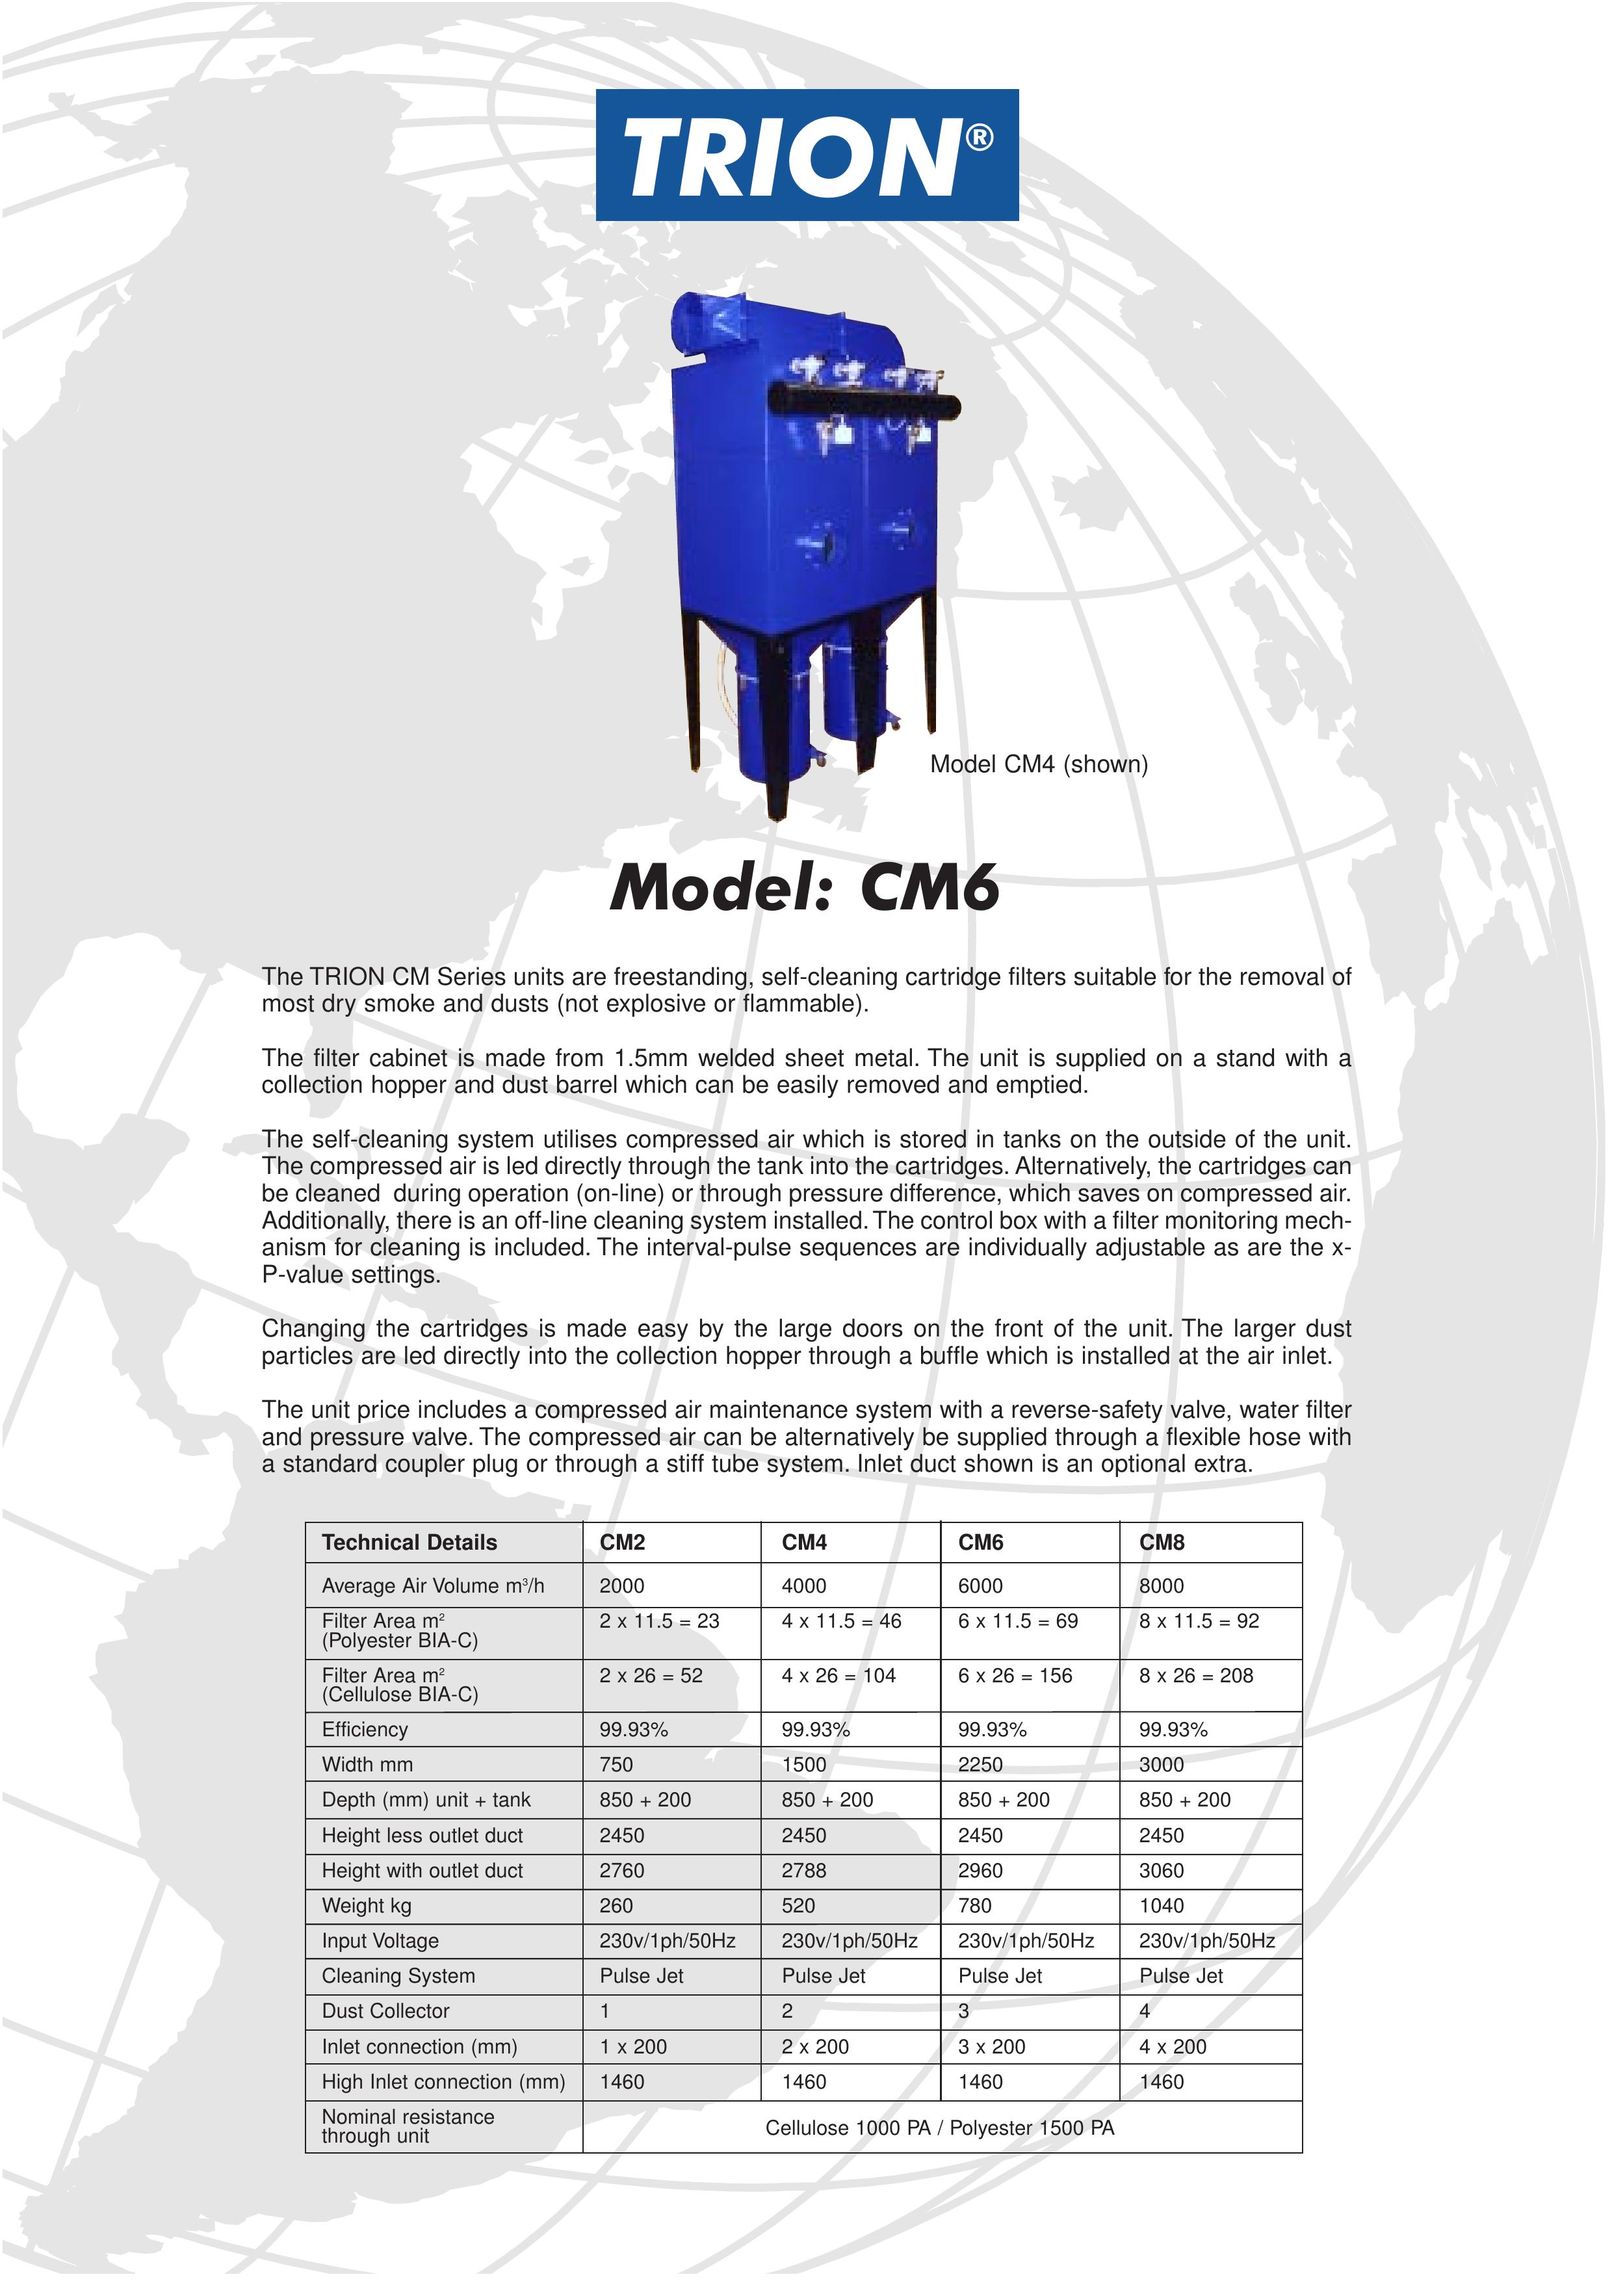 Trion CM4 Air Cleaner User Manual